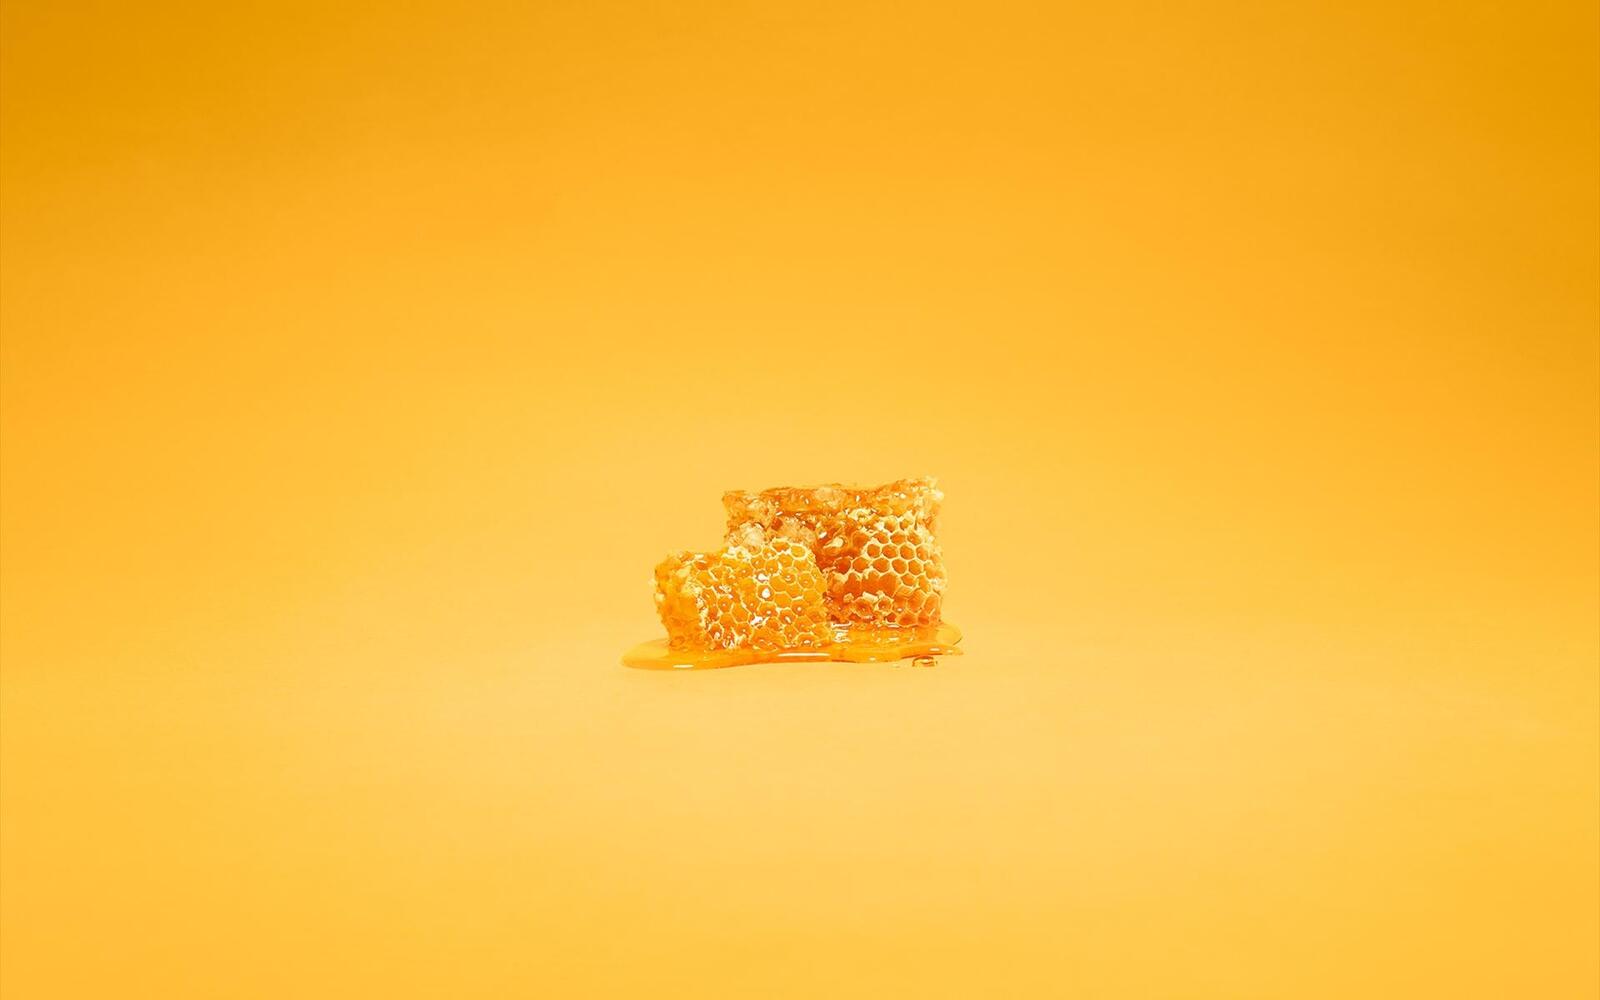 Wallpapers bees honeycombs wax on the desktop